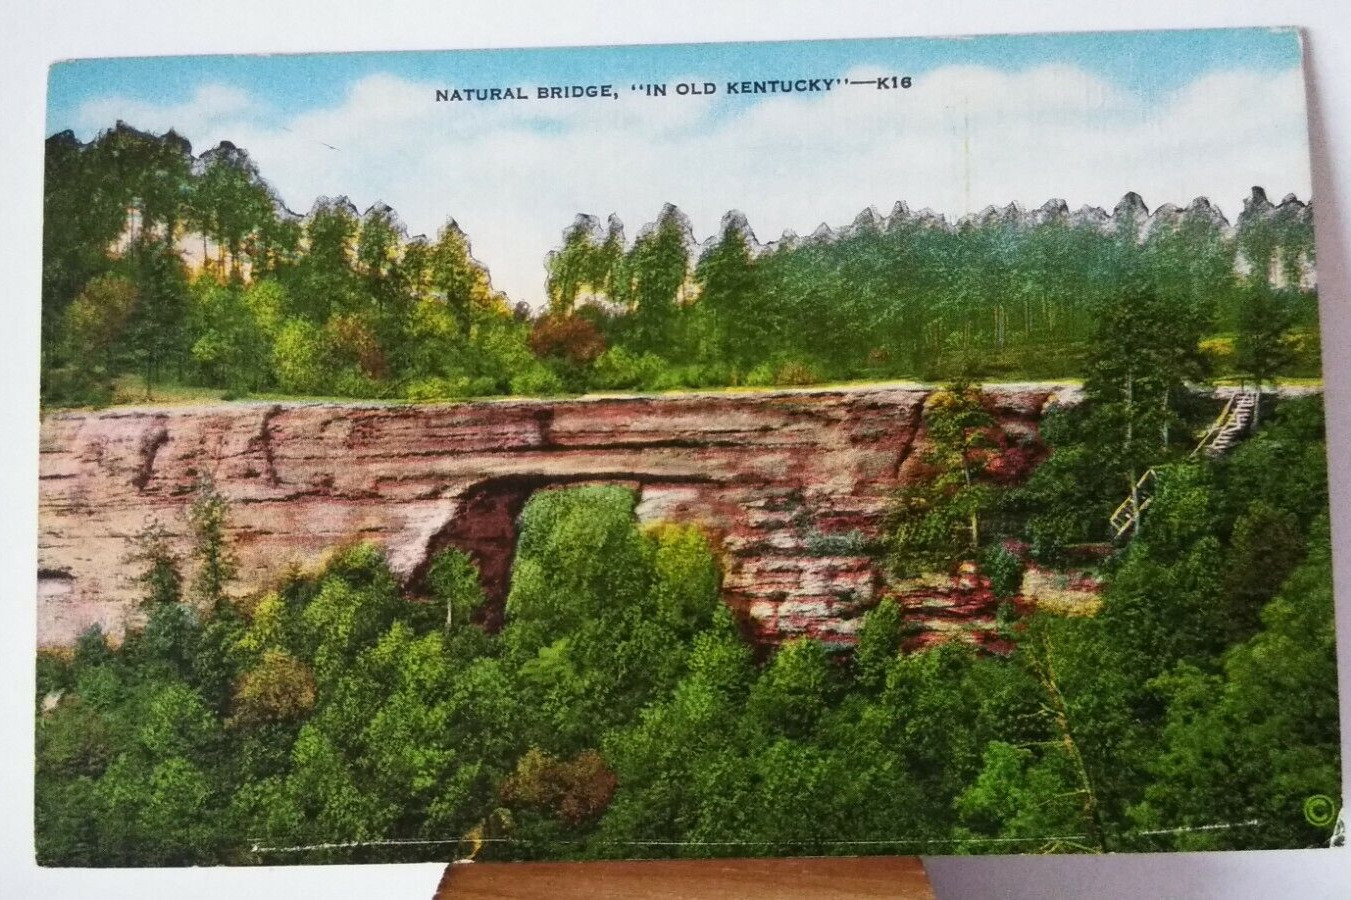 Natural Bridge in Old Kentucky